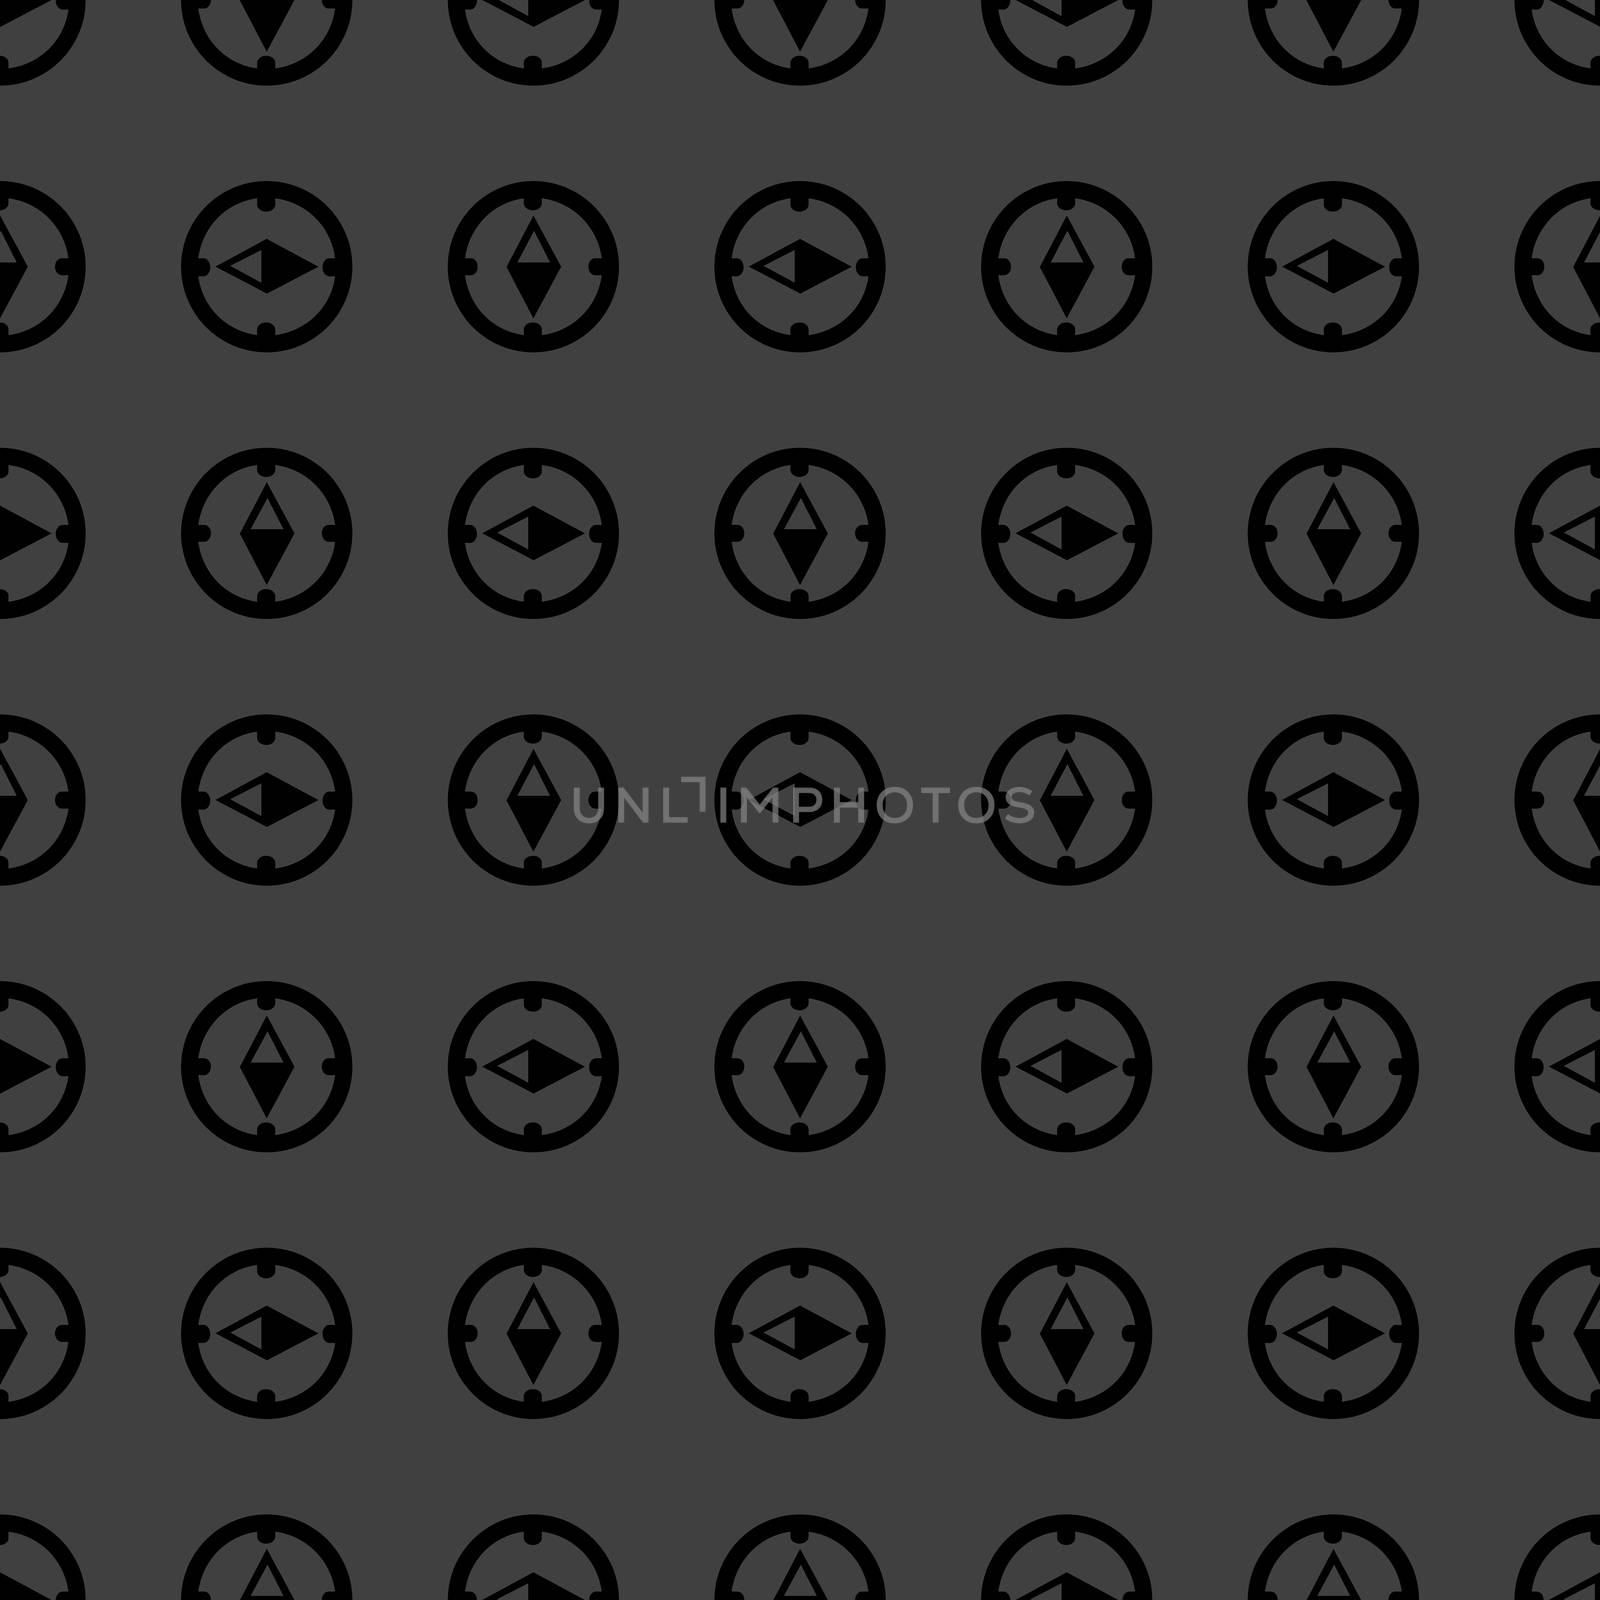 Compass web icon. flat design. Seamless gray pattern.